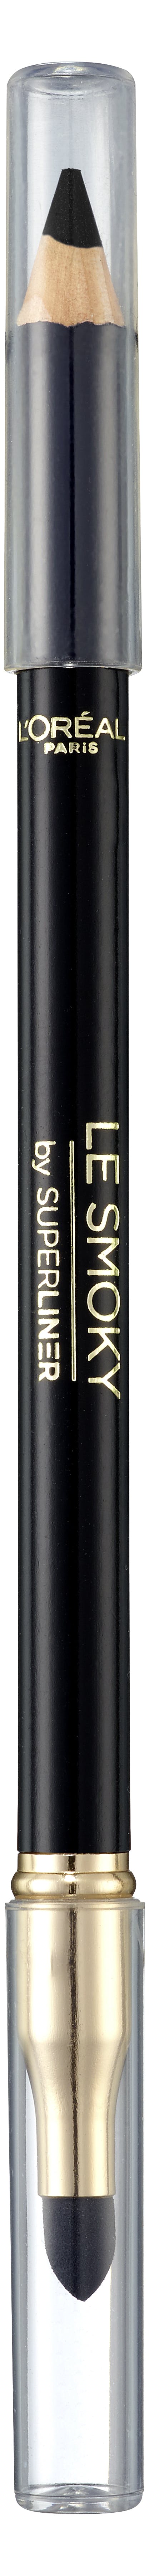 Super Liner Le Smoky_logo